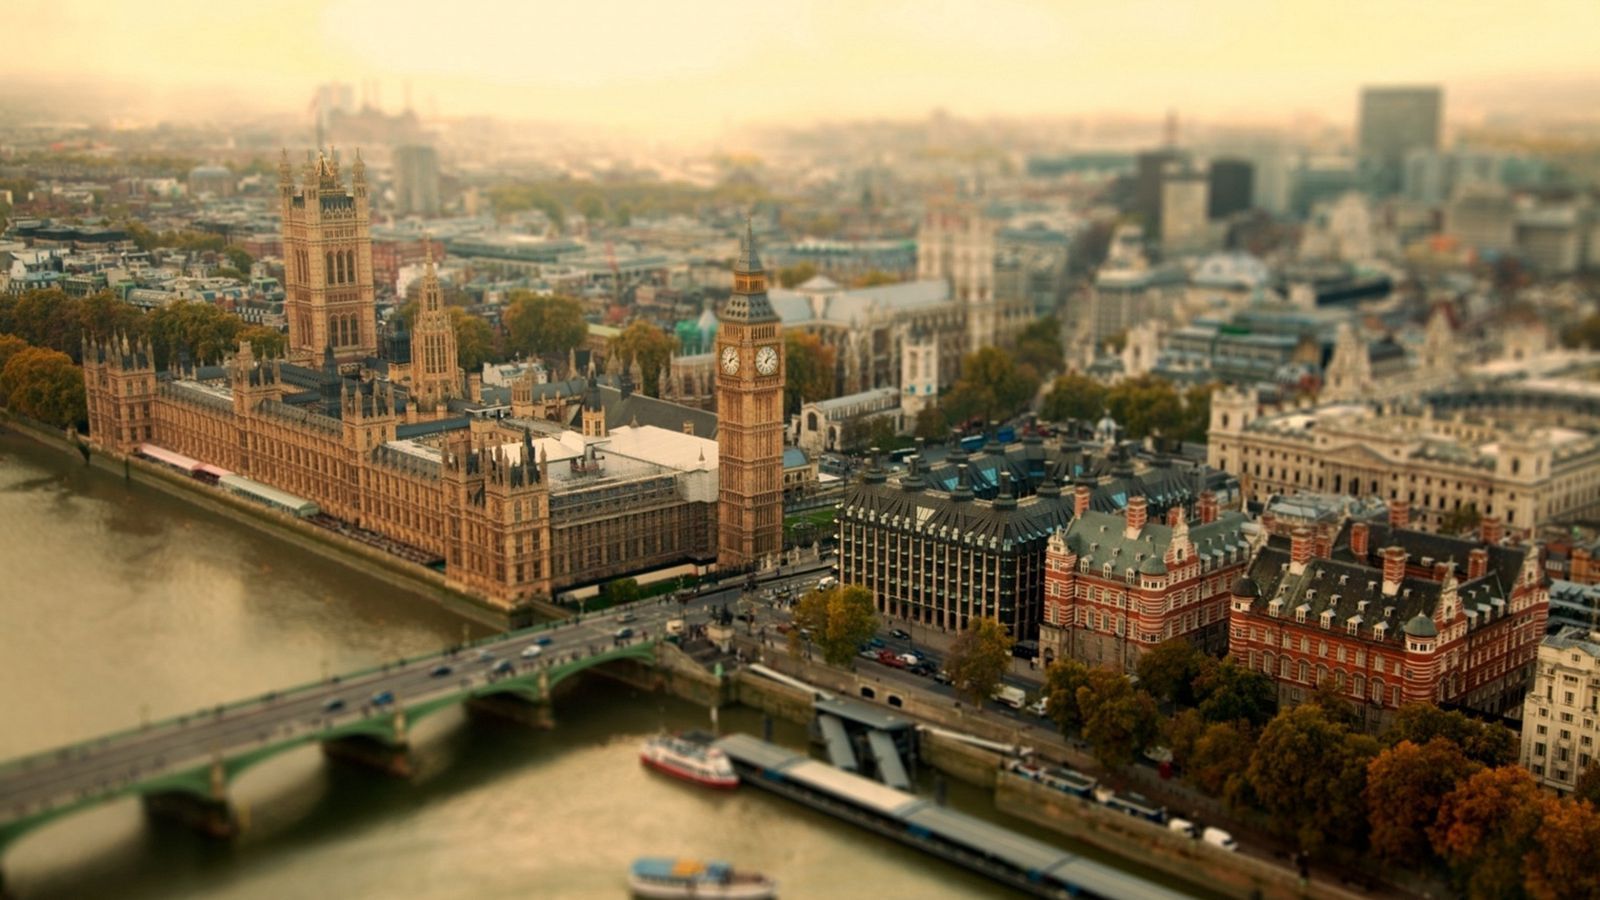 Download wallpaper 1600x900 london, uk, city, tower bridge widescreen 16:9 HD background